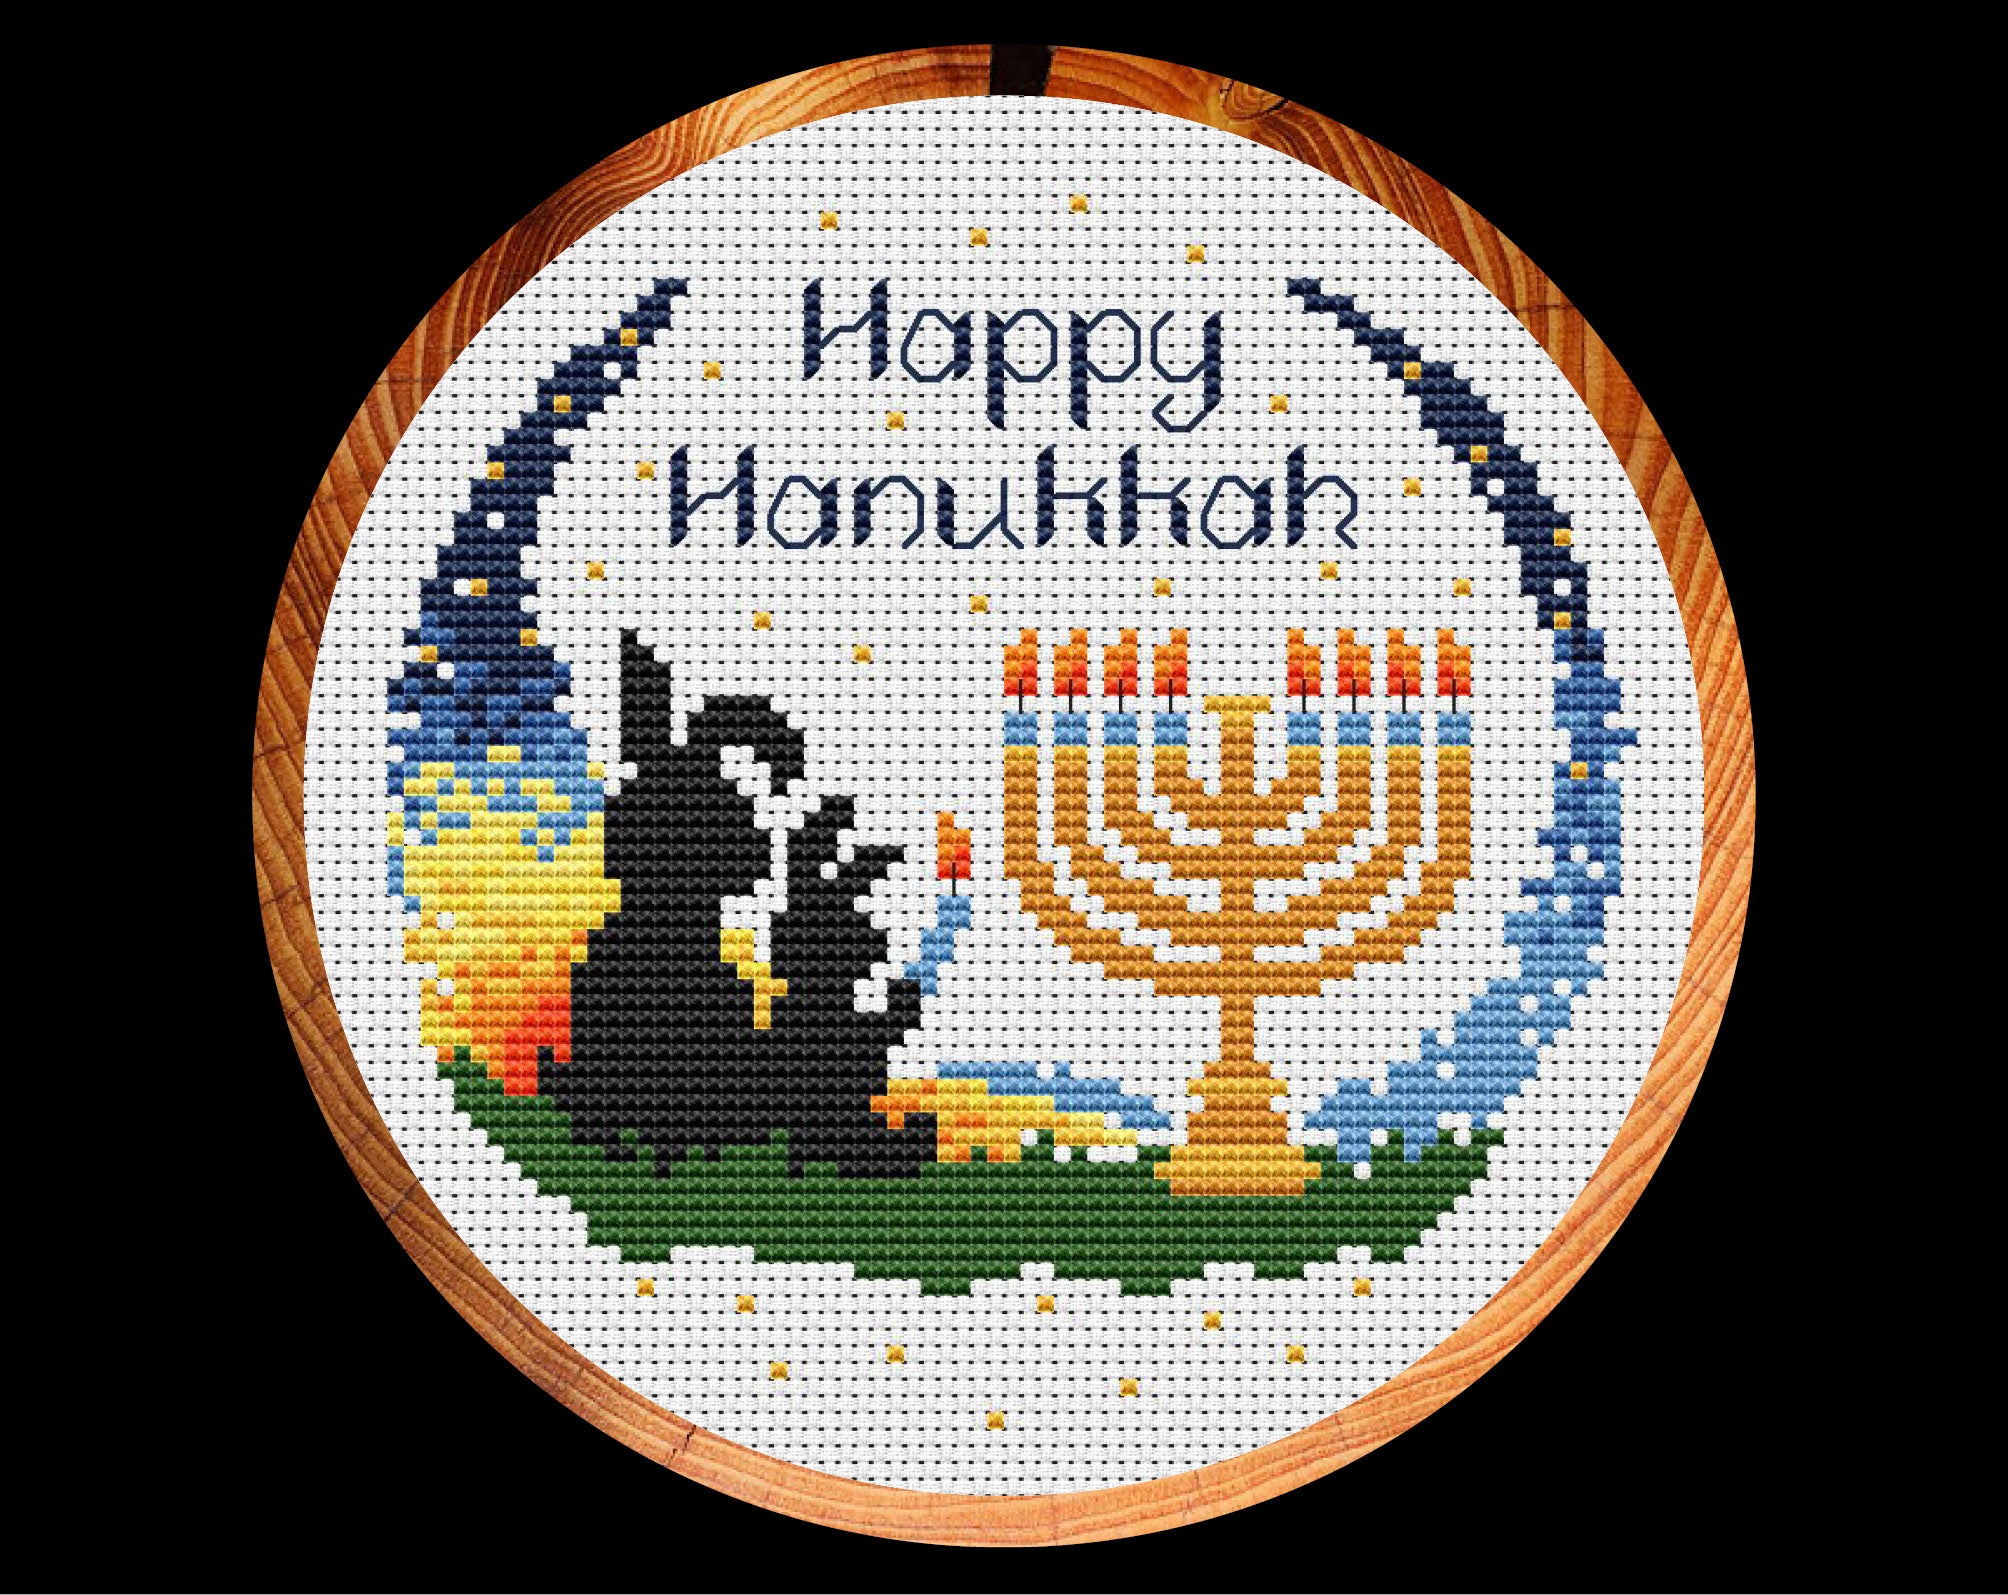 Happy Hanukkah Bunnies cross stitch pattern. Two bunnies lighting a menorah at sunset with the words Happy Hanukkah. Shown in hoop.